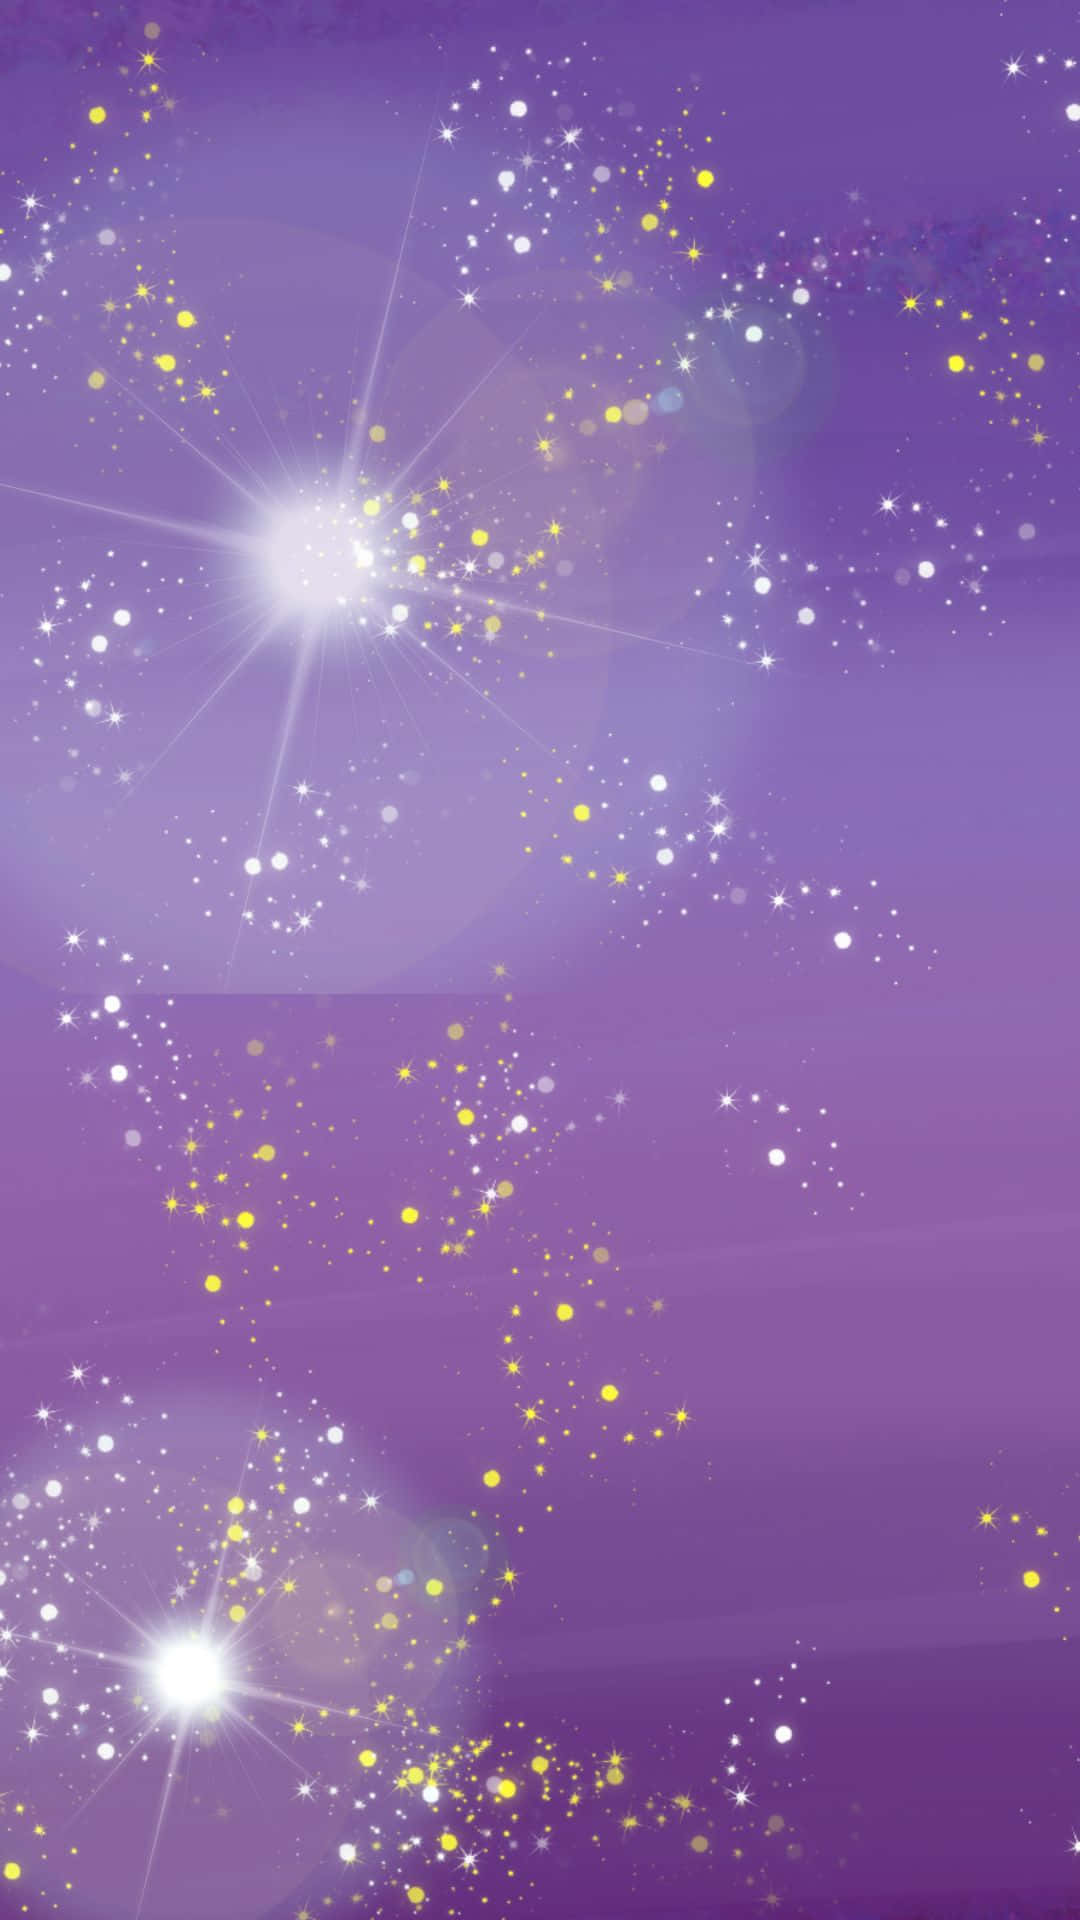 Illuminate the night with a purple sparkle background!